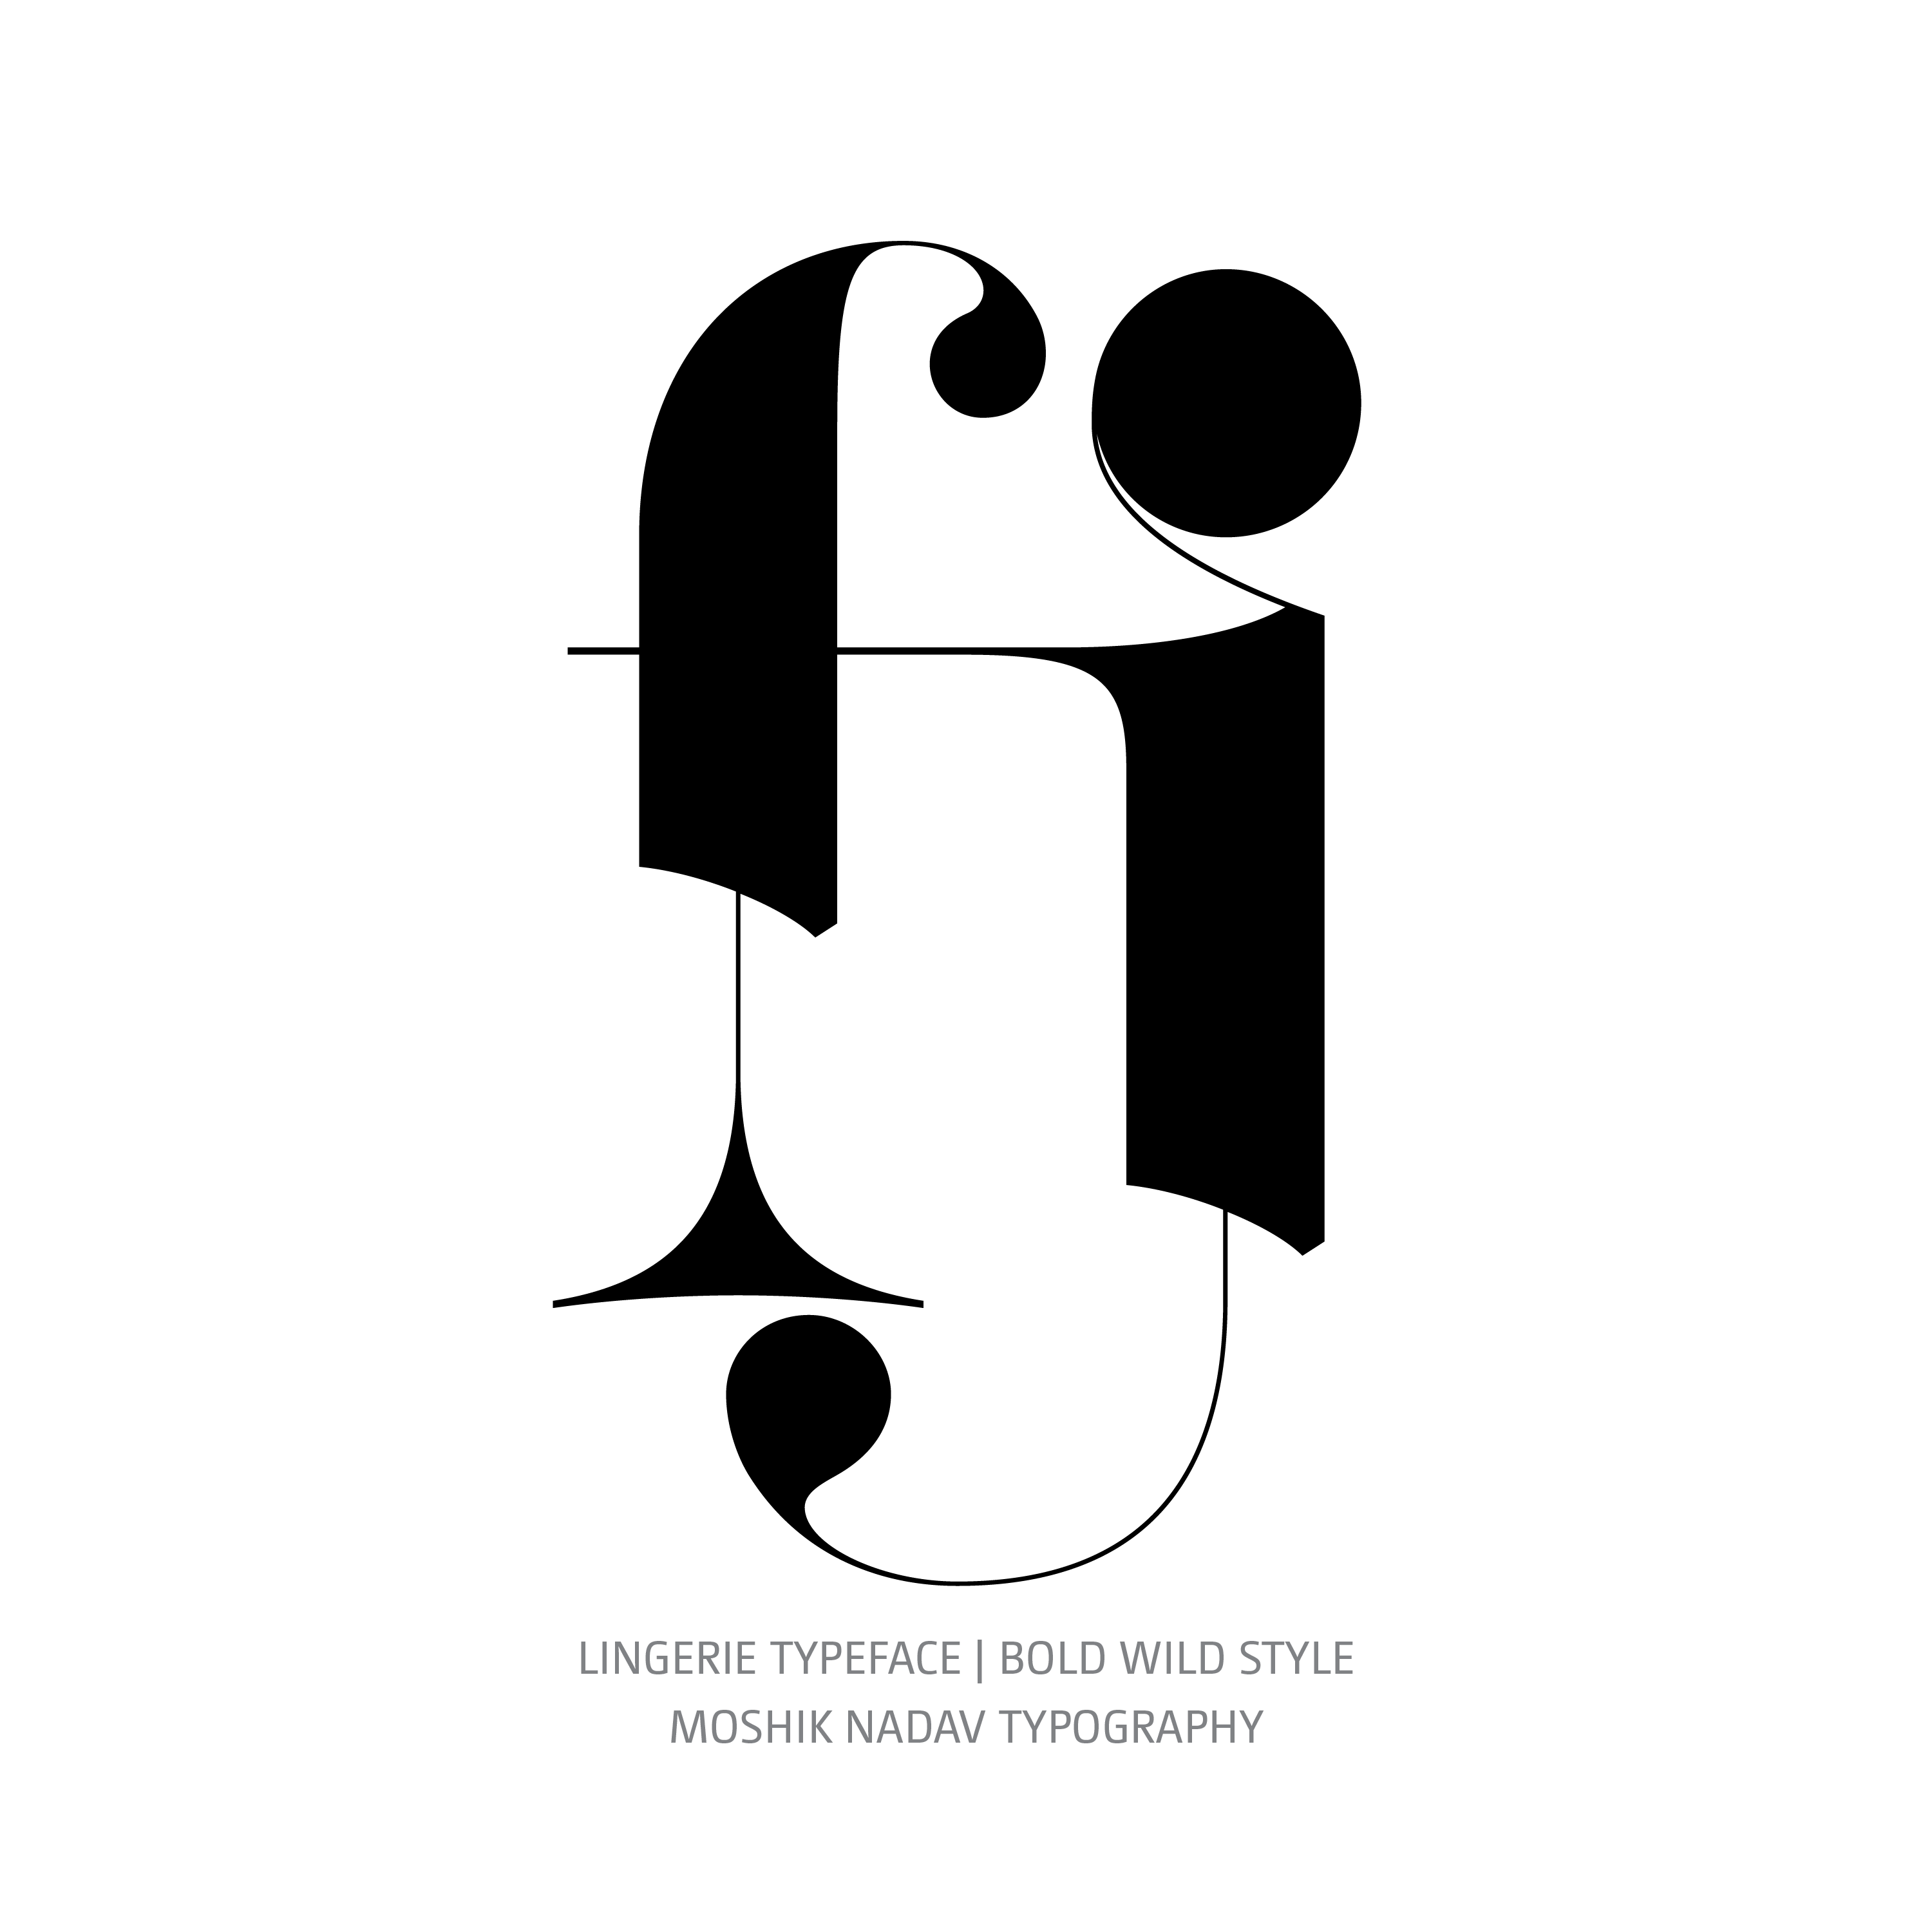 Lingerie Typeface Bold Wild fj ligature